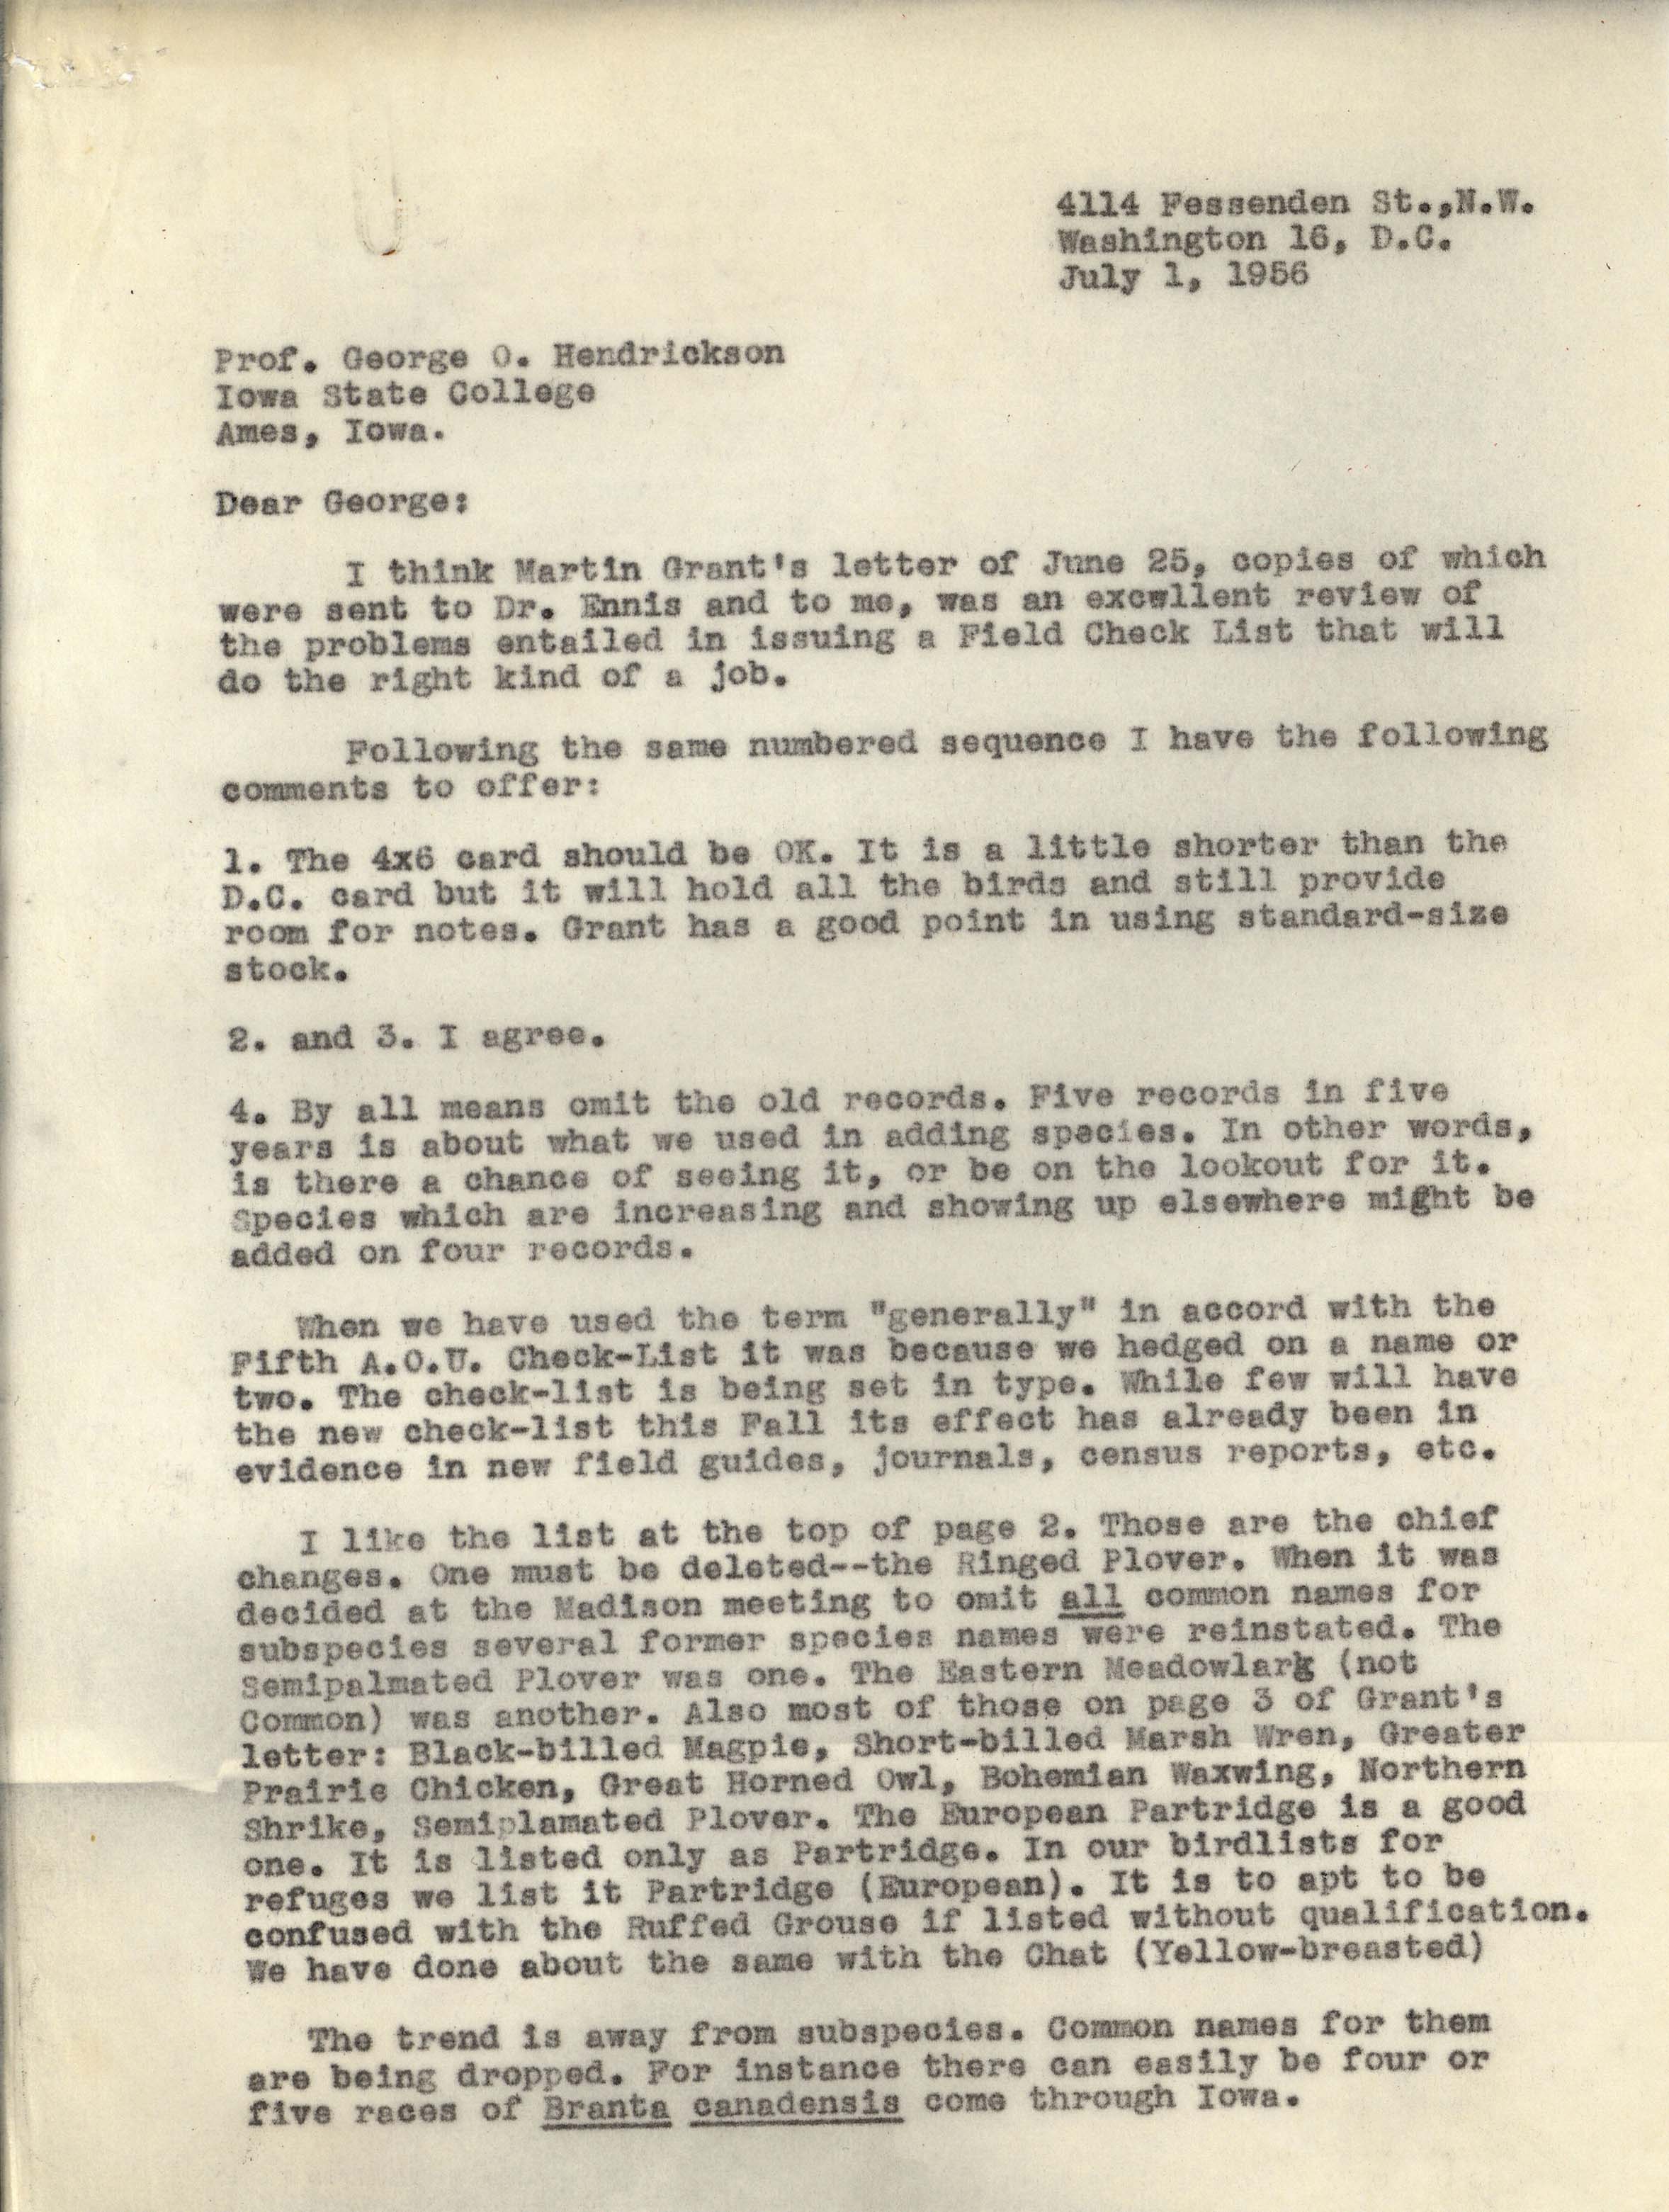 Philip DuMont letter to George Hendrickson regarding Martin Grant's suggestions, July 1, 1956